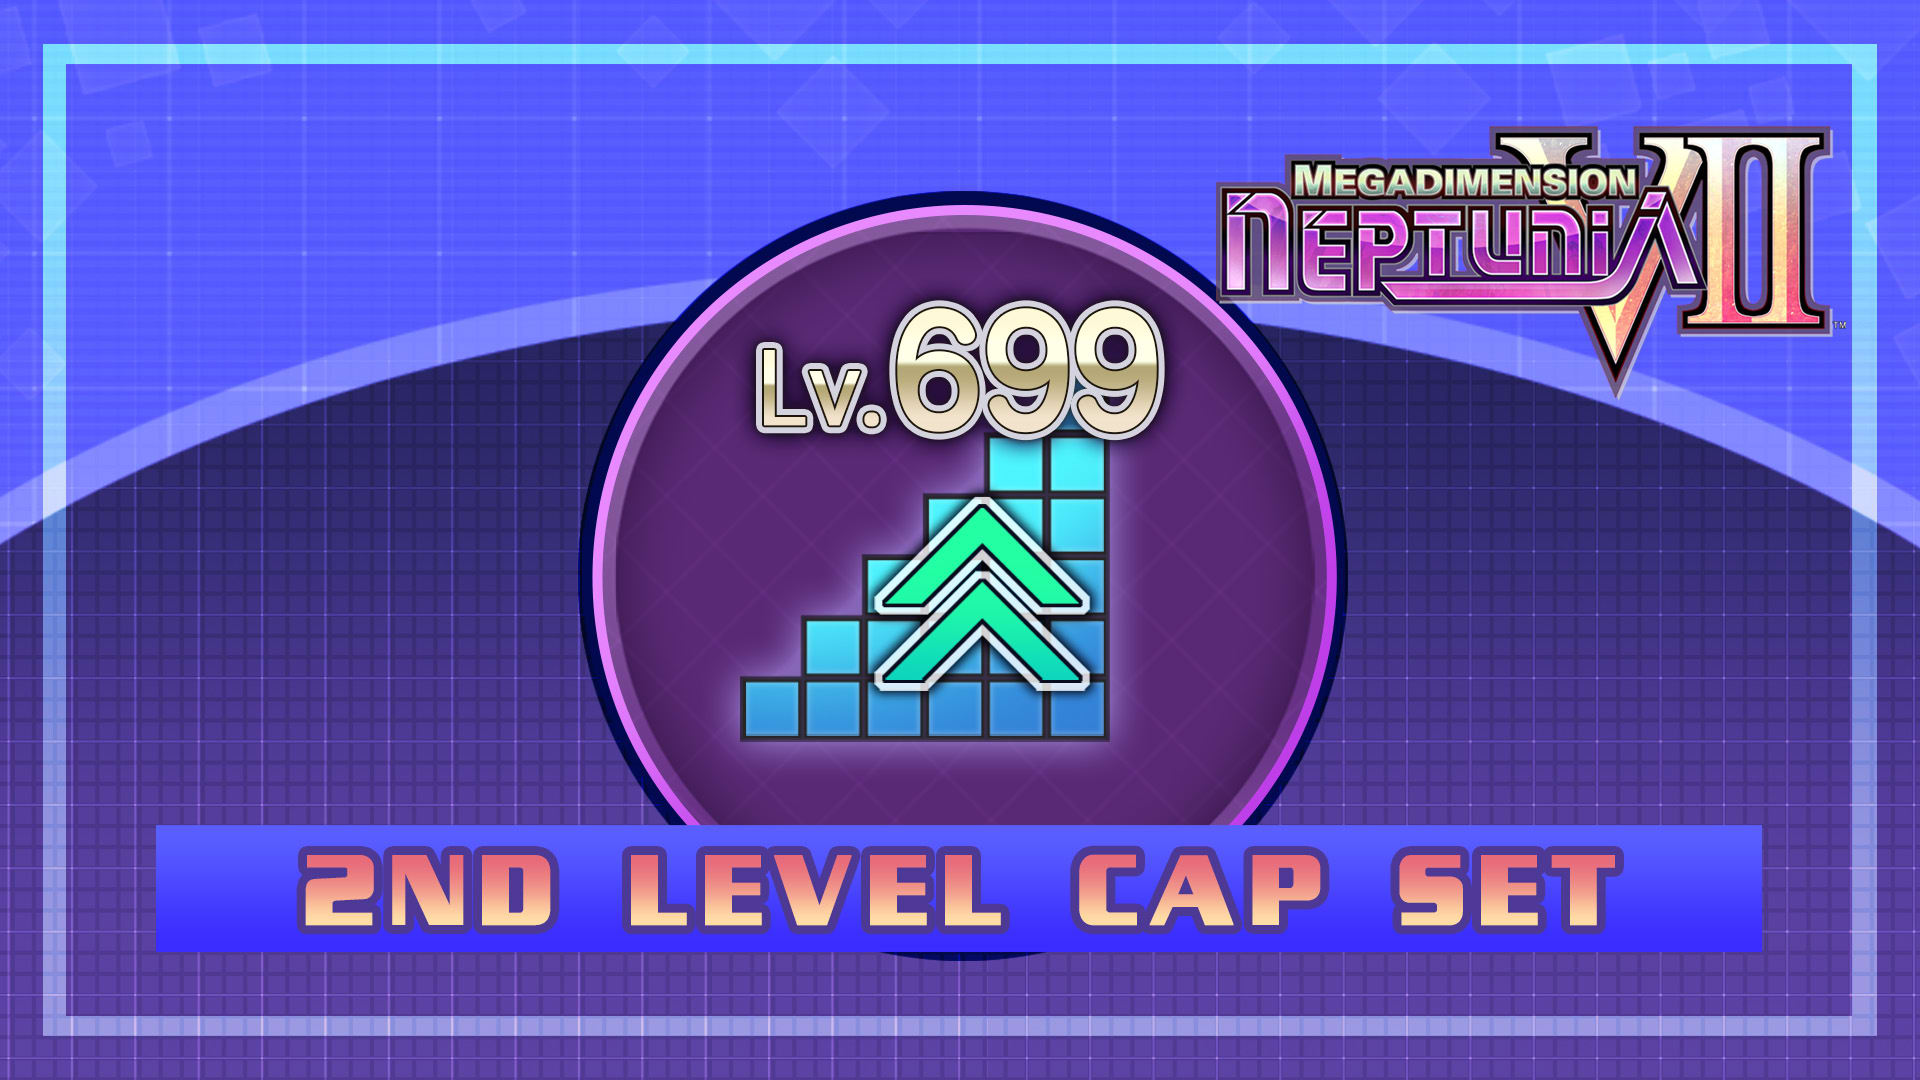 2nd Level Cap Set